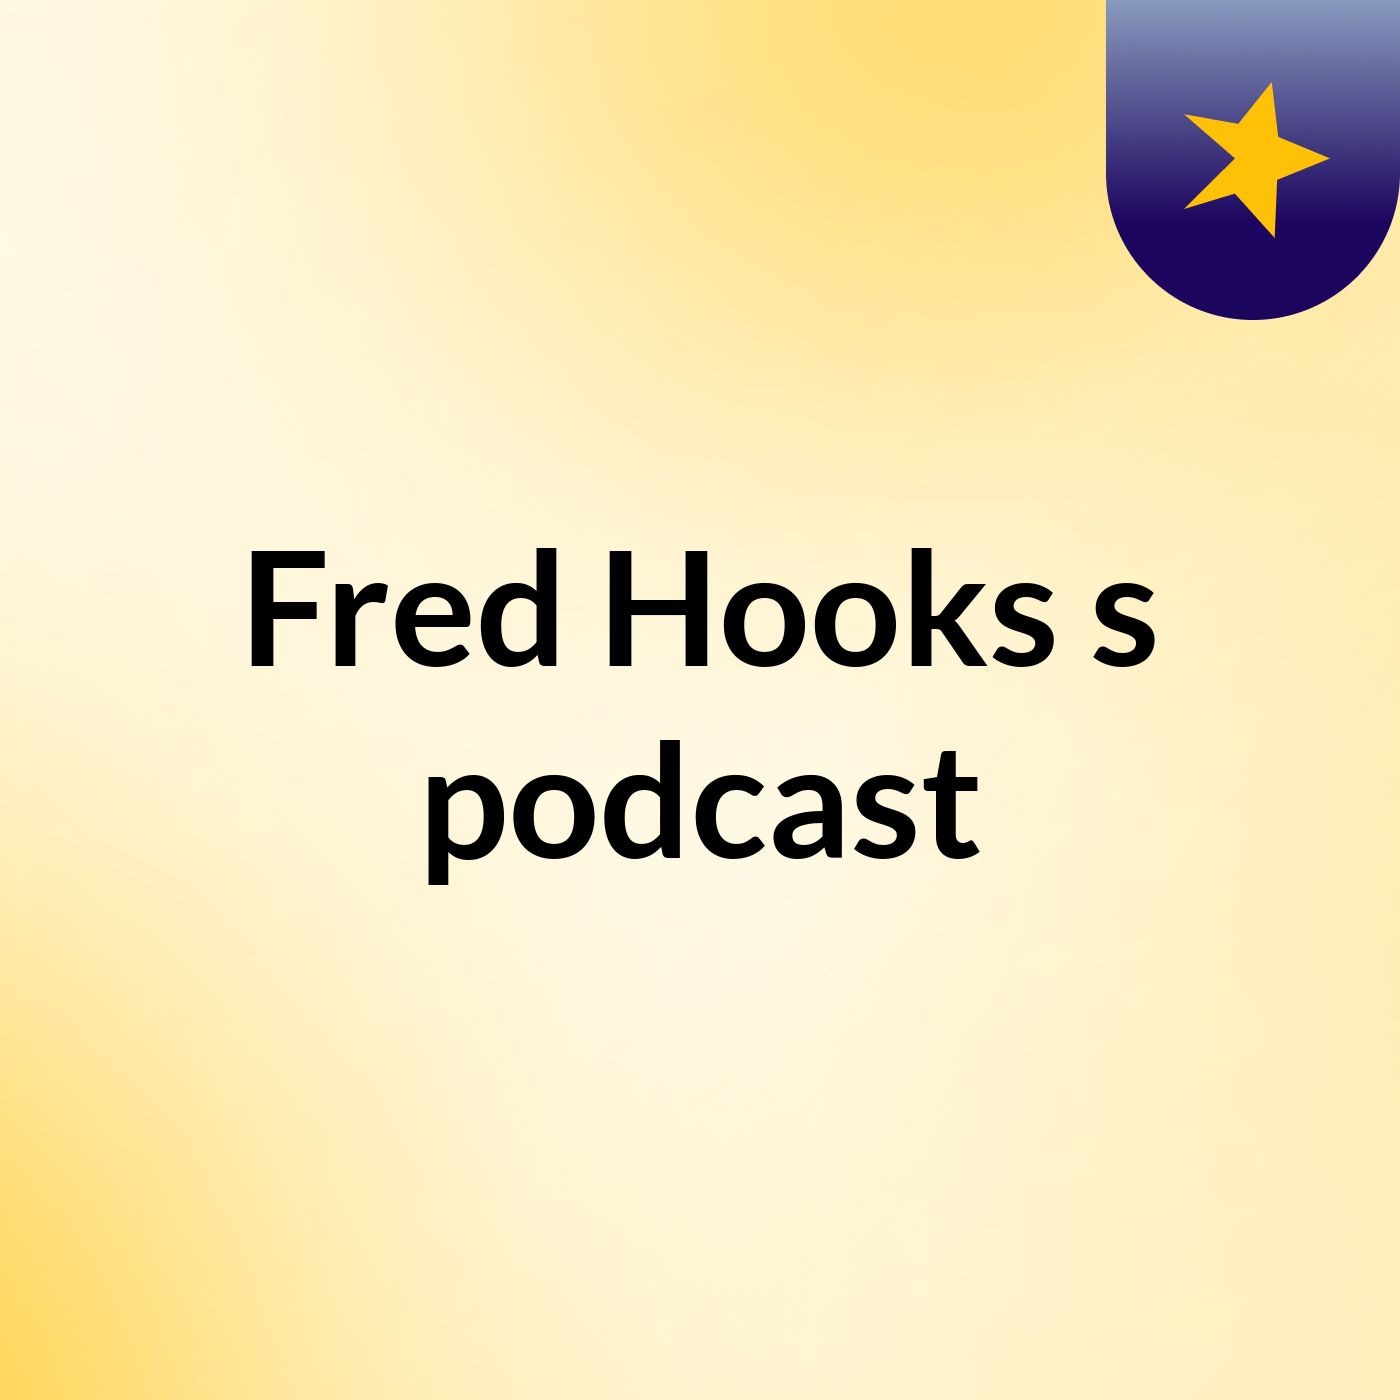 Fred Hooks's podcast